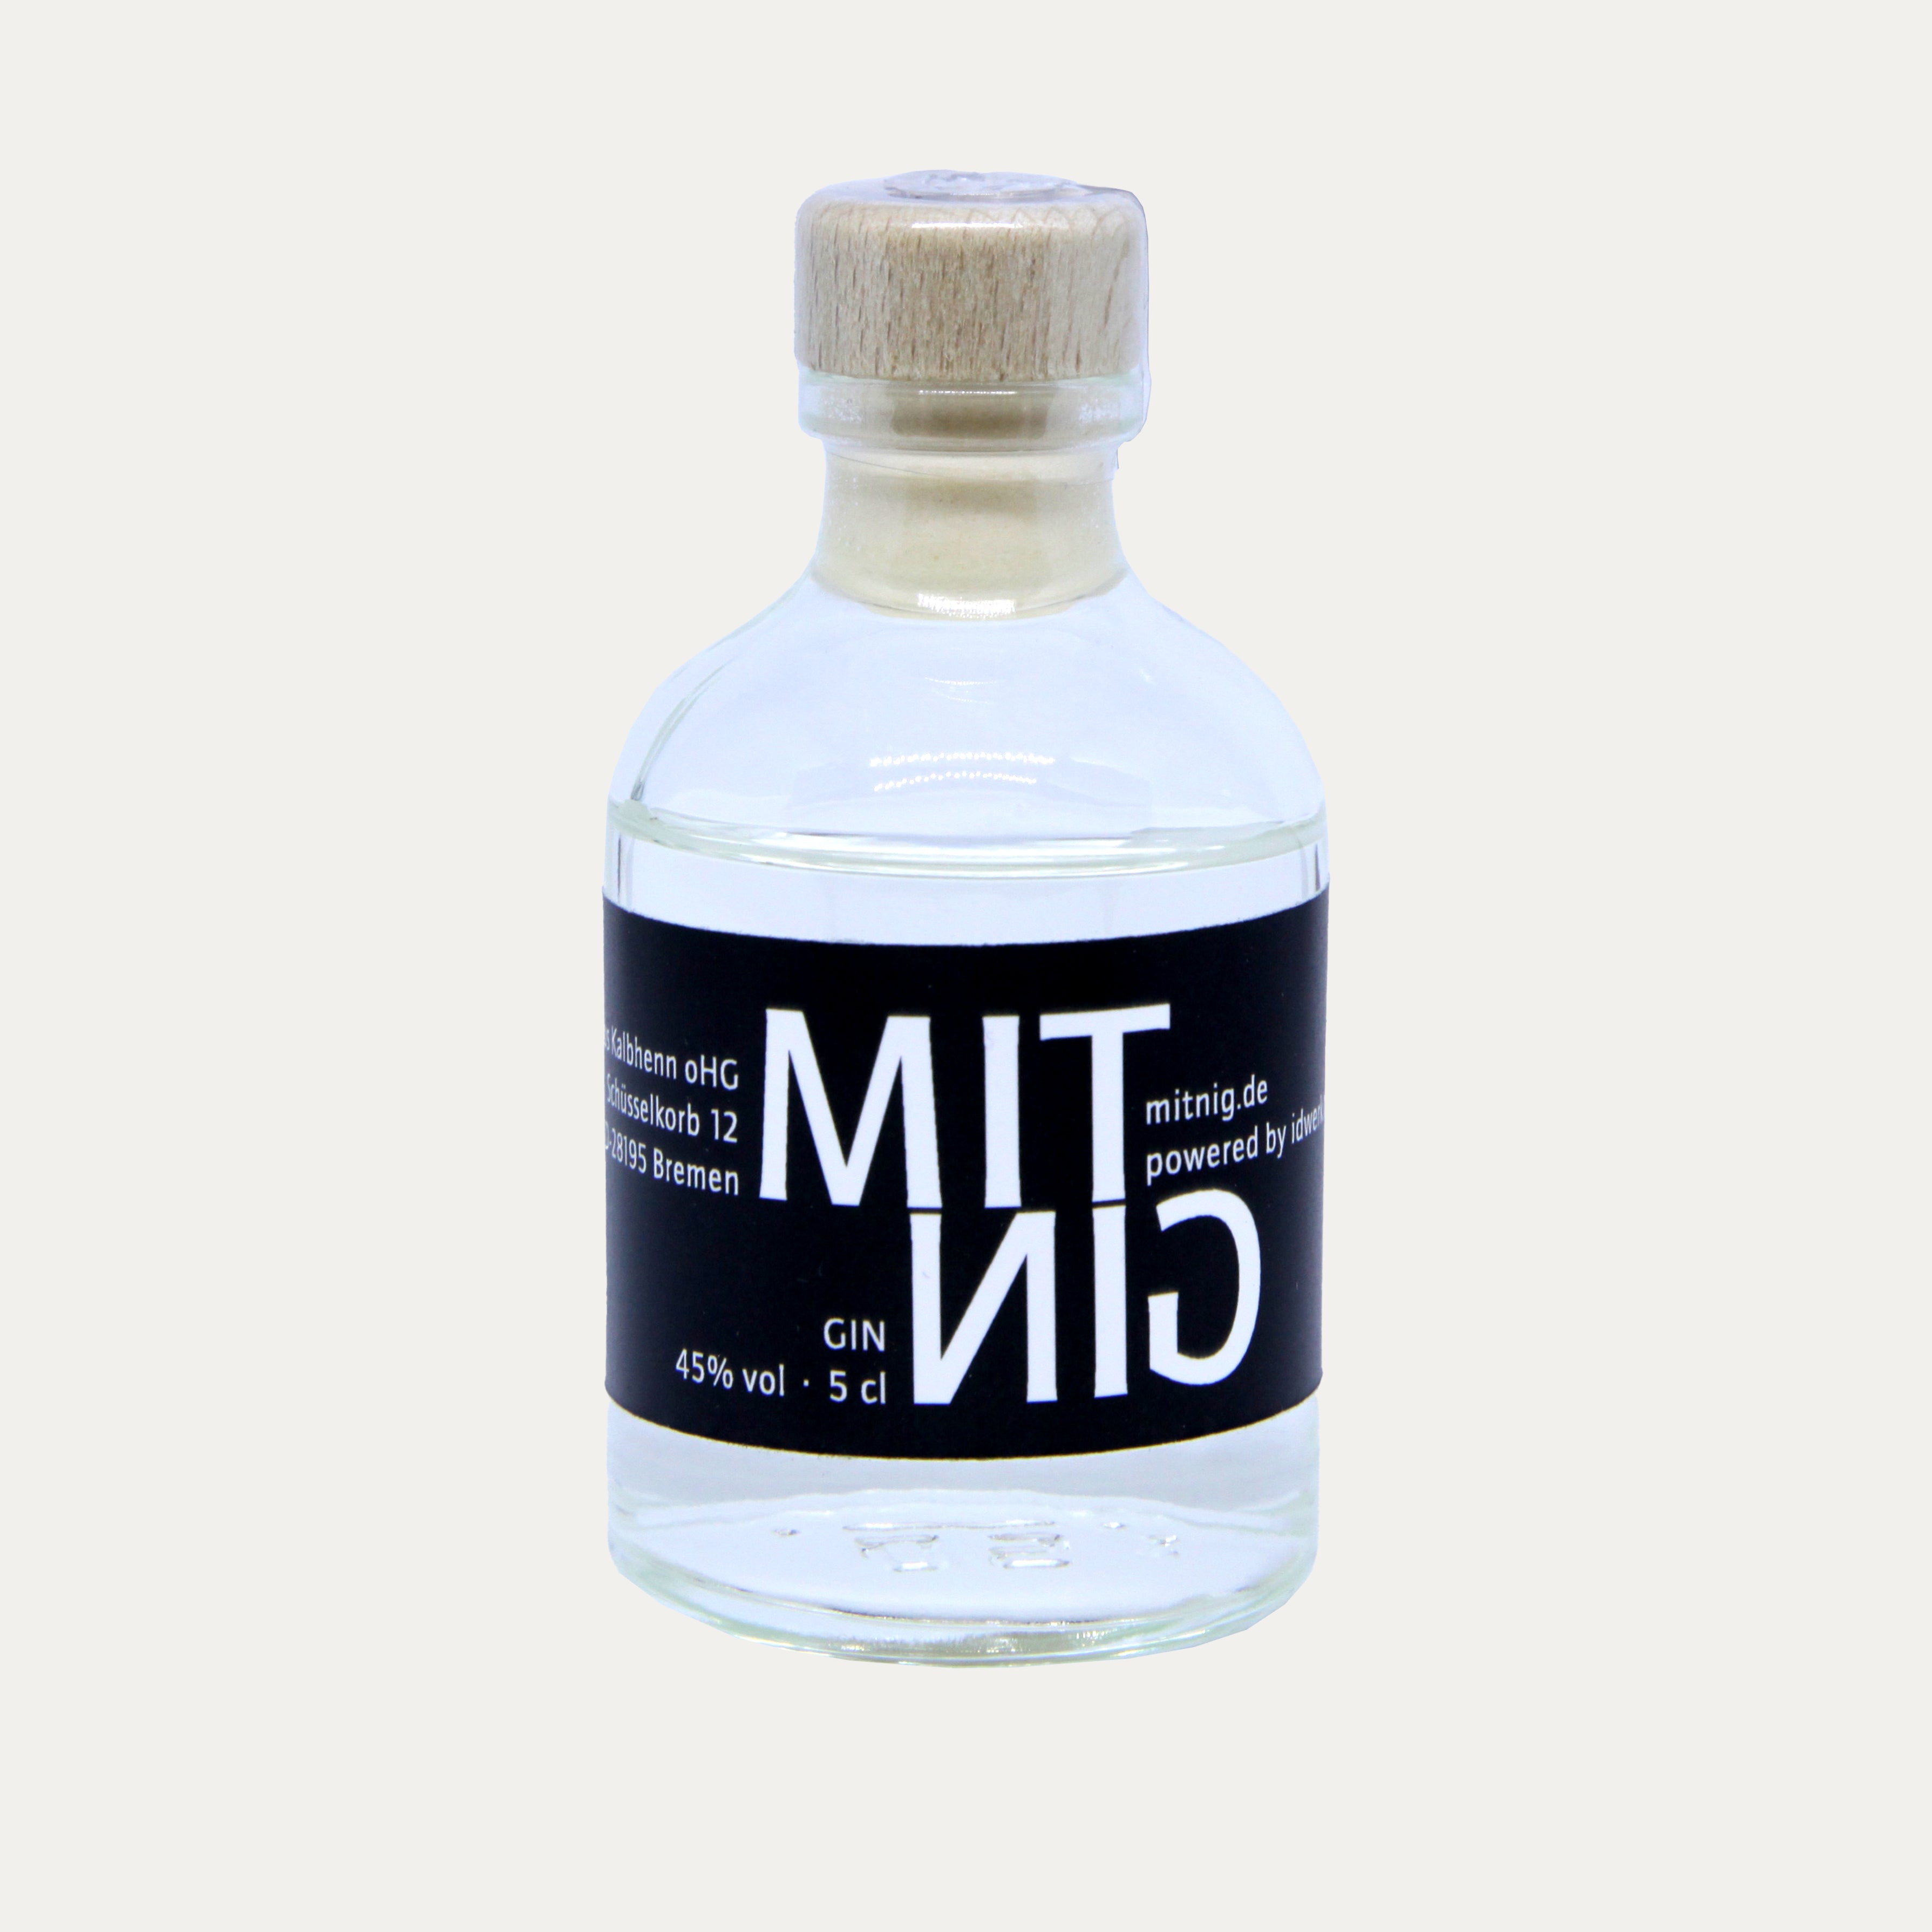 MITNIG Black 50ml mini - Made in Bremen - Julius Kalbhenn OHG -